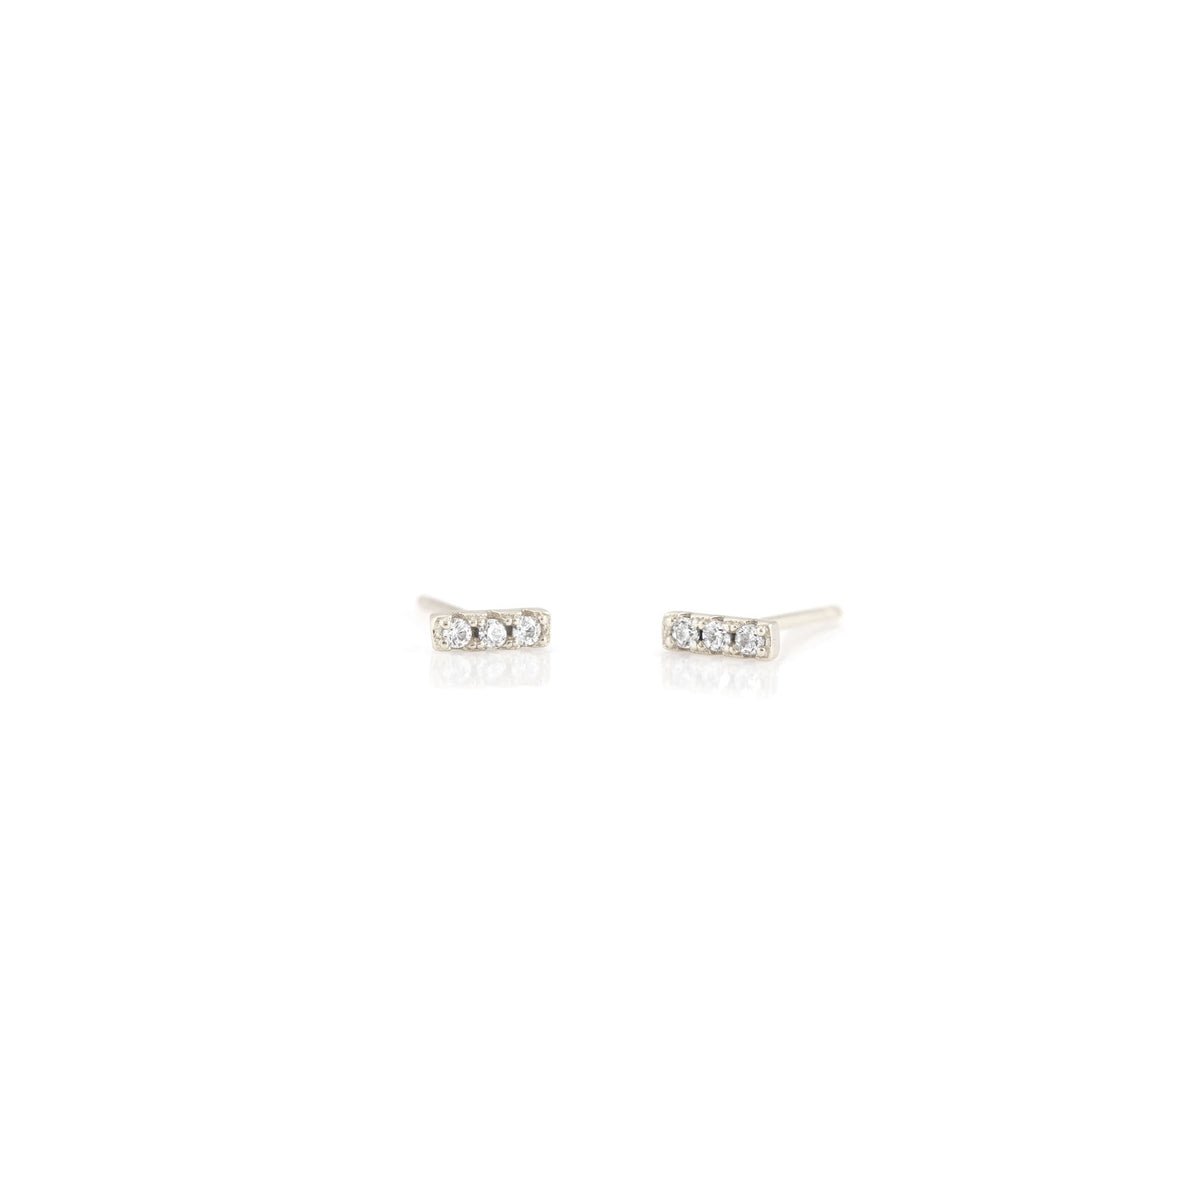 Dash/Bar Pave Stud Earrings | Pave Bar Earrings